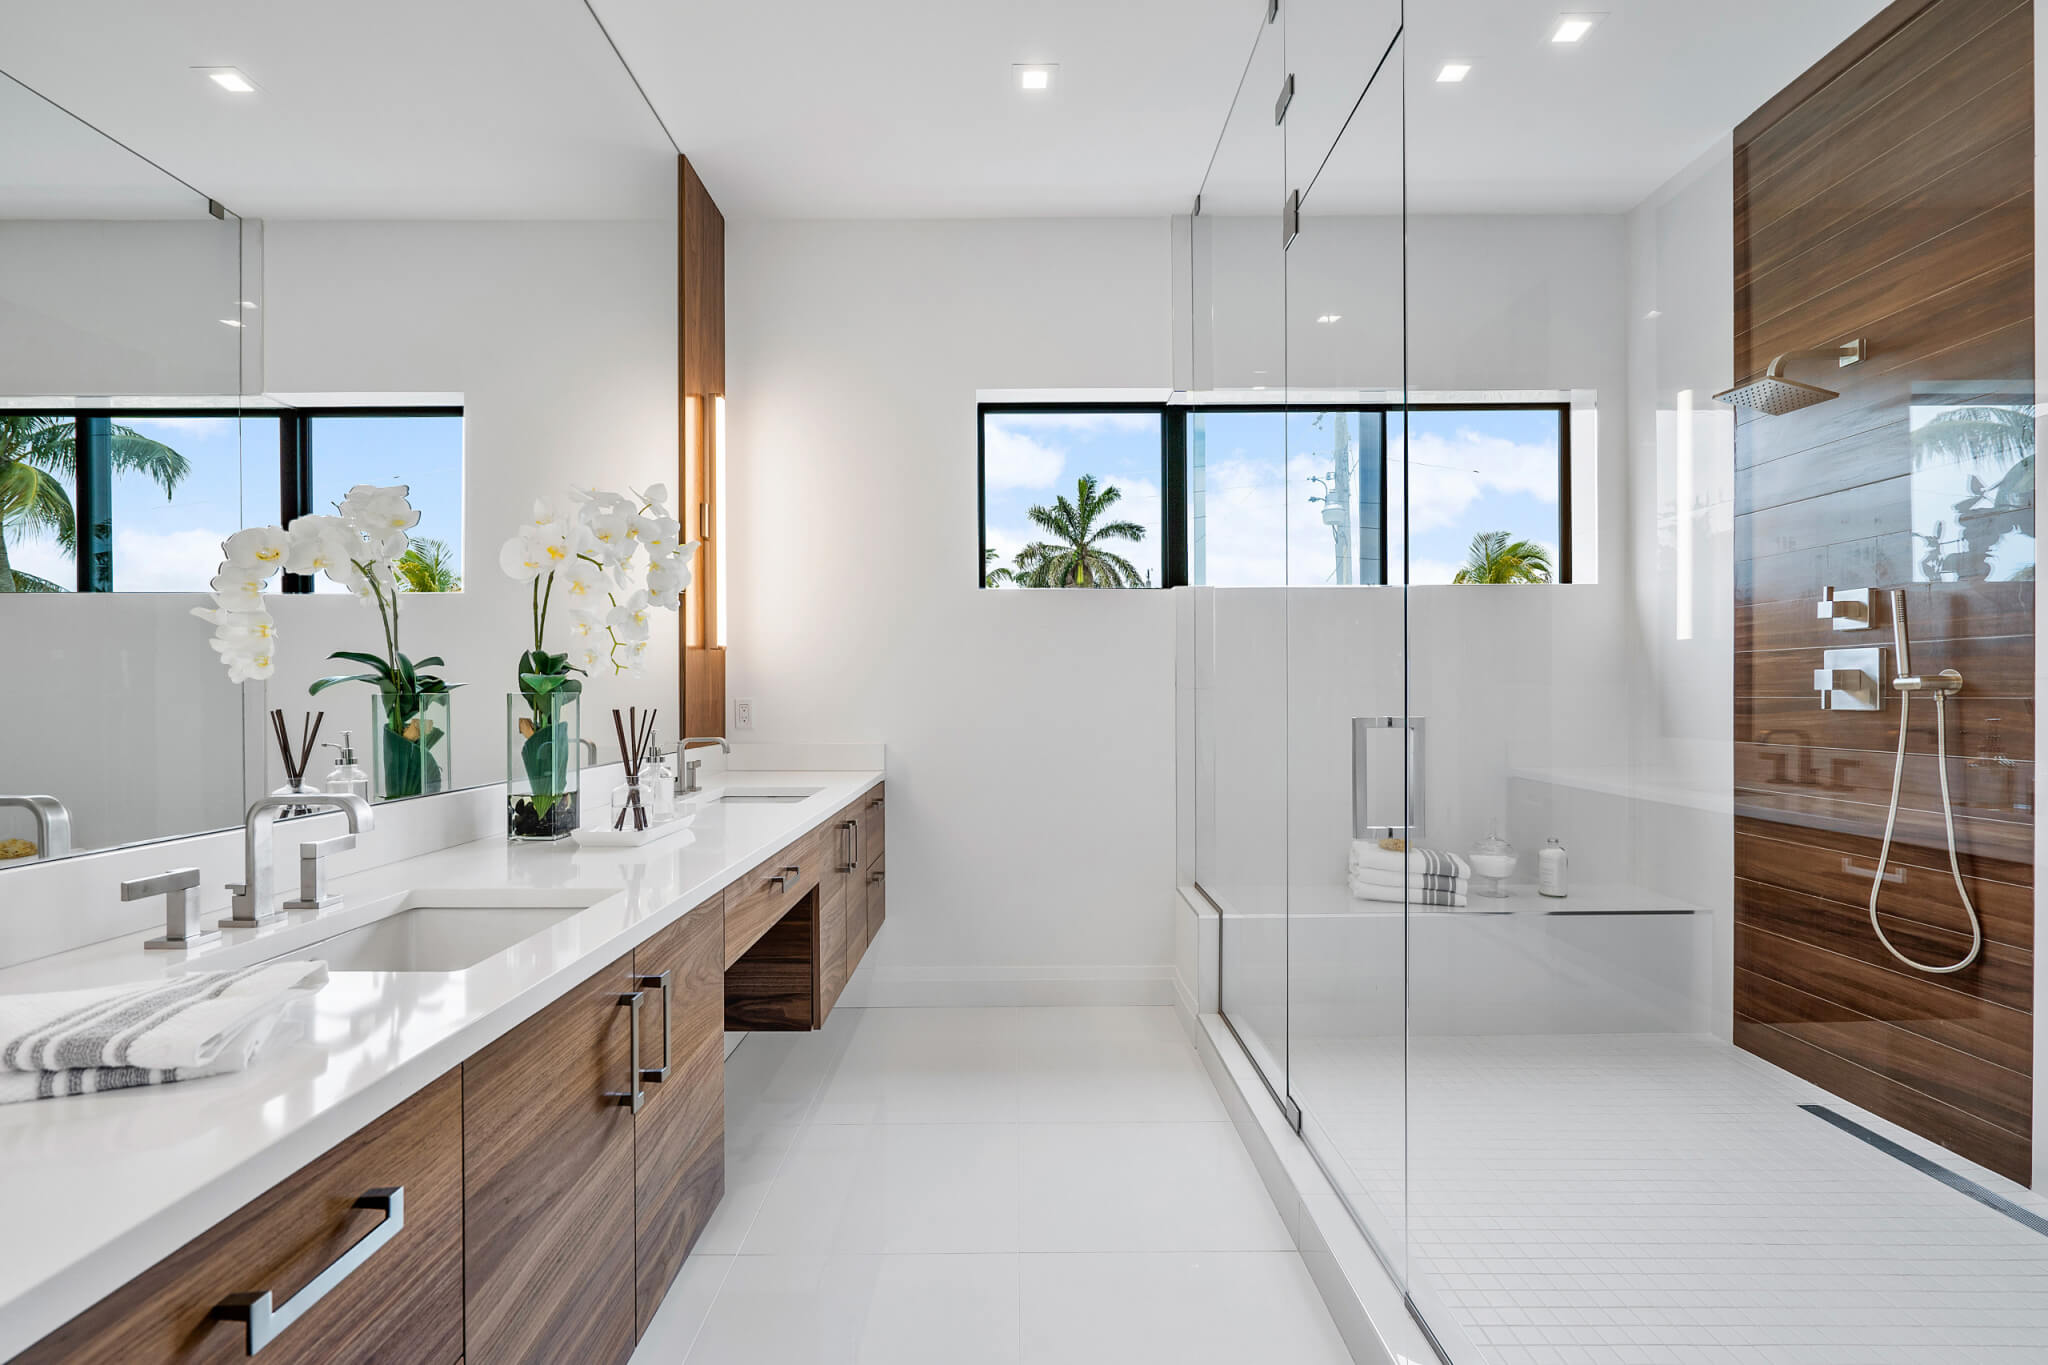 Bathroom vanity with light wood cabinets and geometric tile backsplash.